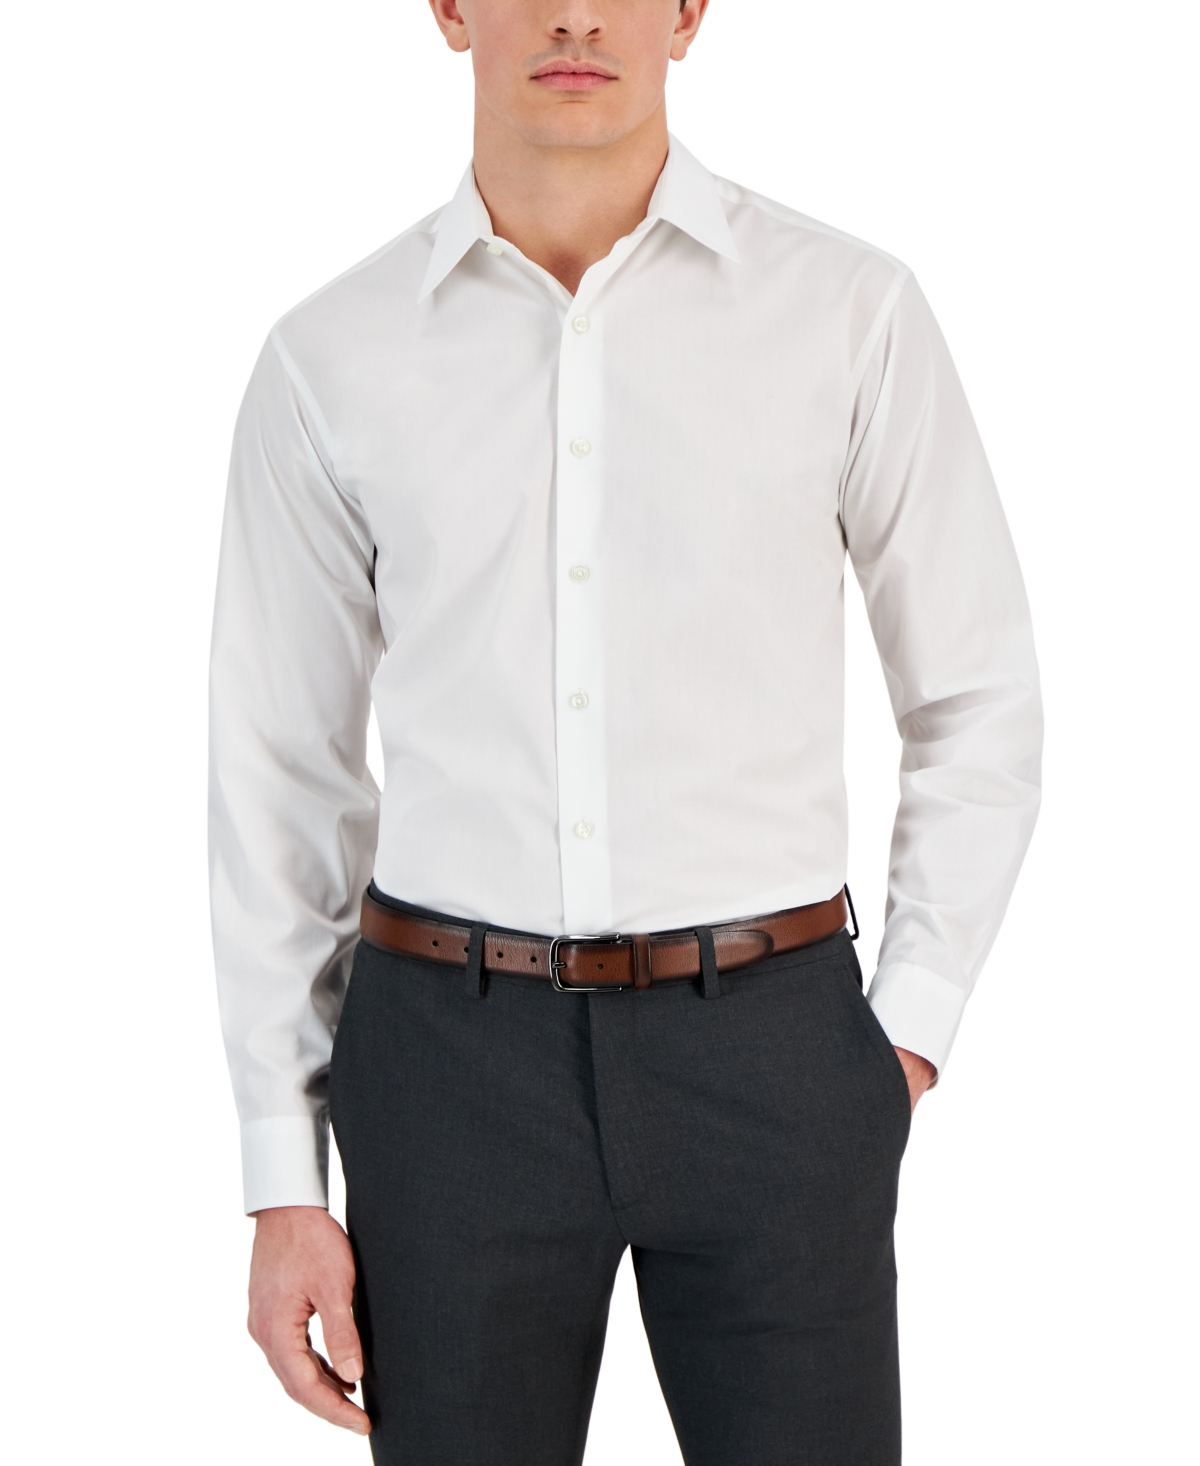 Men's Regular-Fit Solid Dress Shirt, Created for Macy's - Deep Black